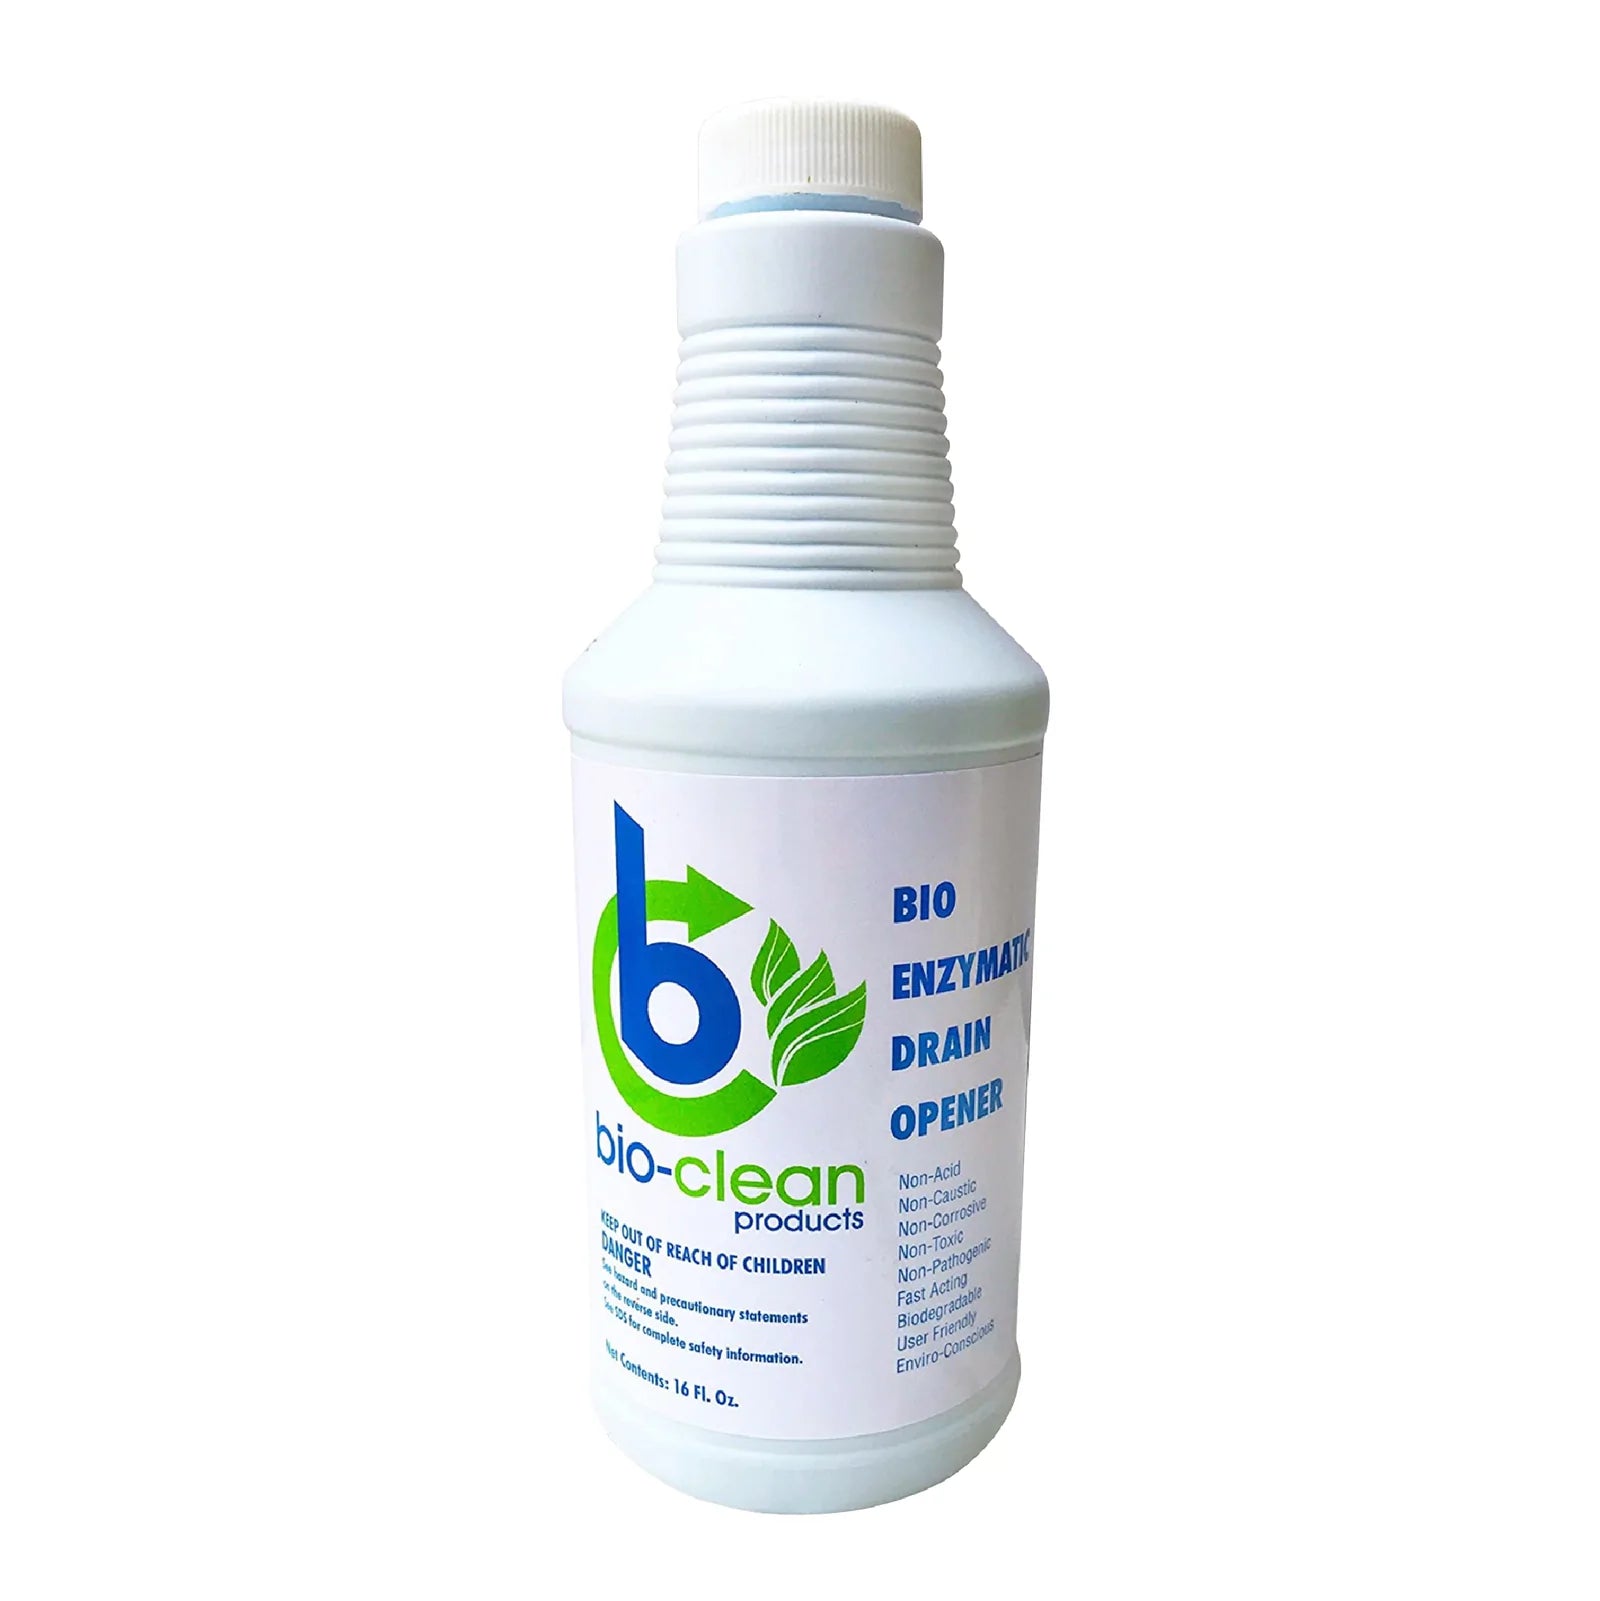 Bio-Clean Bio-Enzymatic Drain Opener